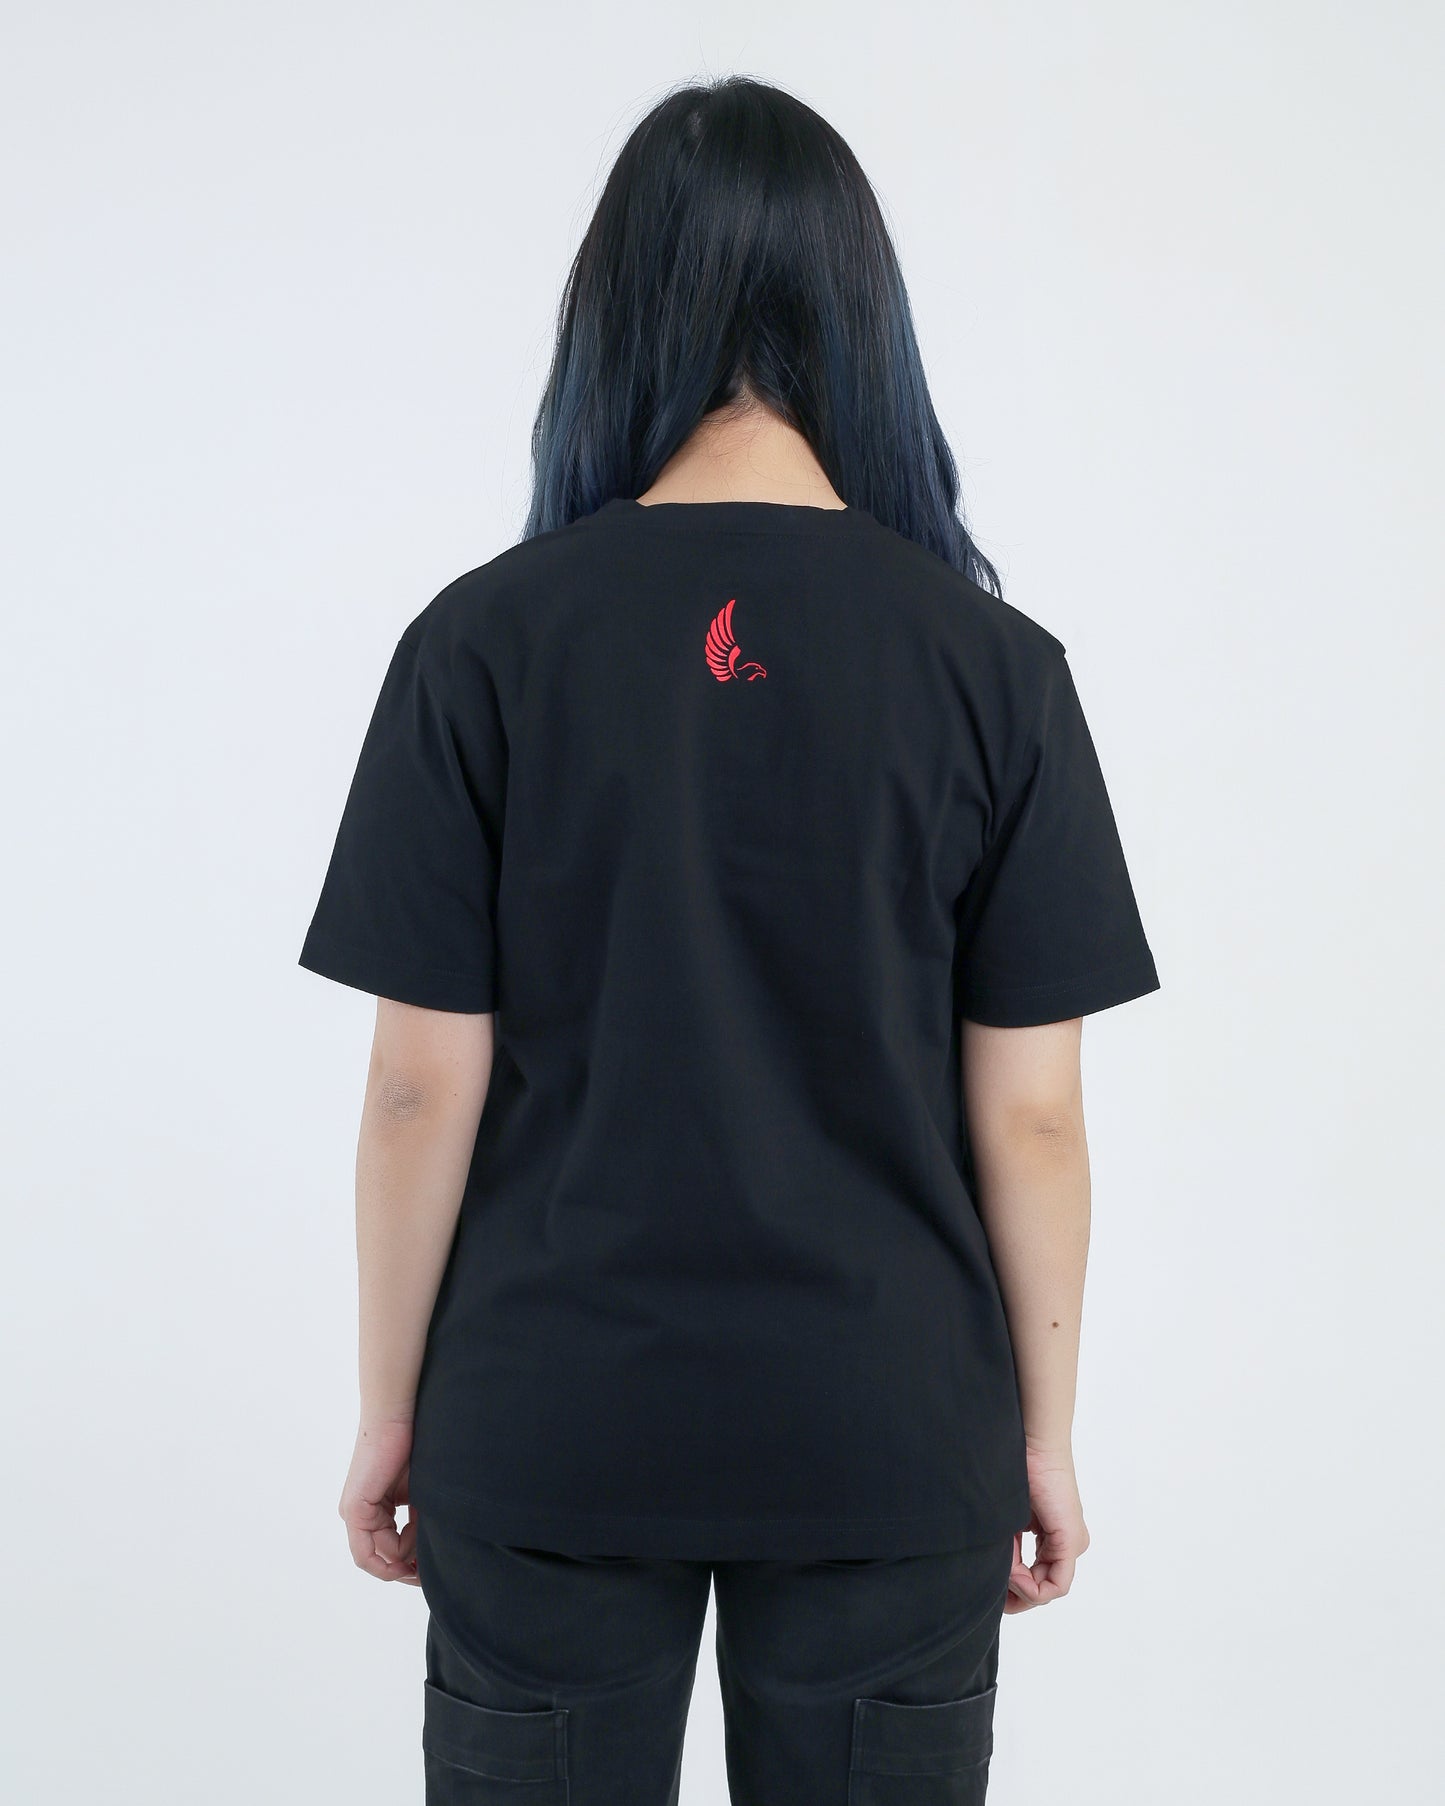 SRX Unisex V-Neck T-Shirt Black (SRX 595)